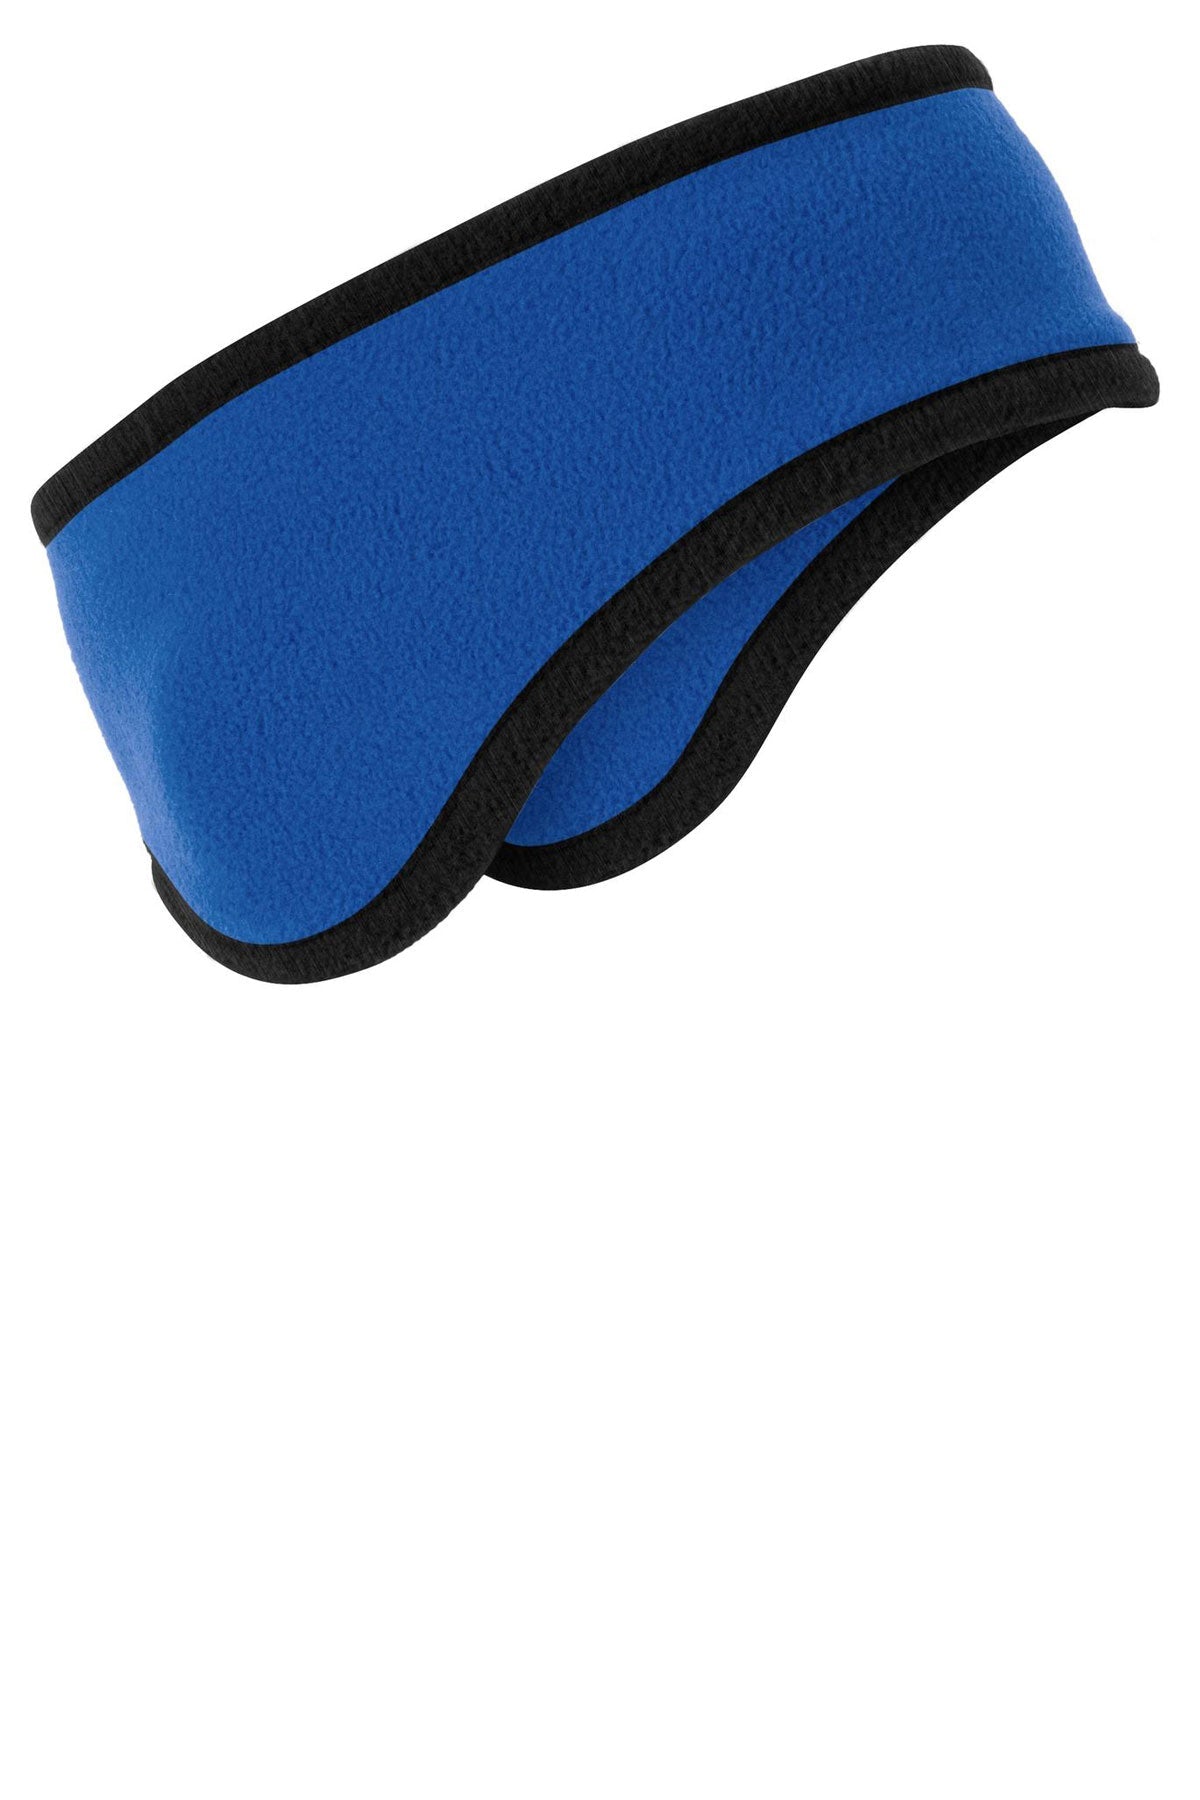 Port Authority Two-Color Fleece Customized Headbands, Royal